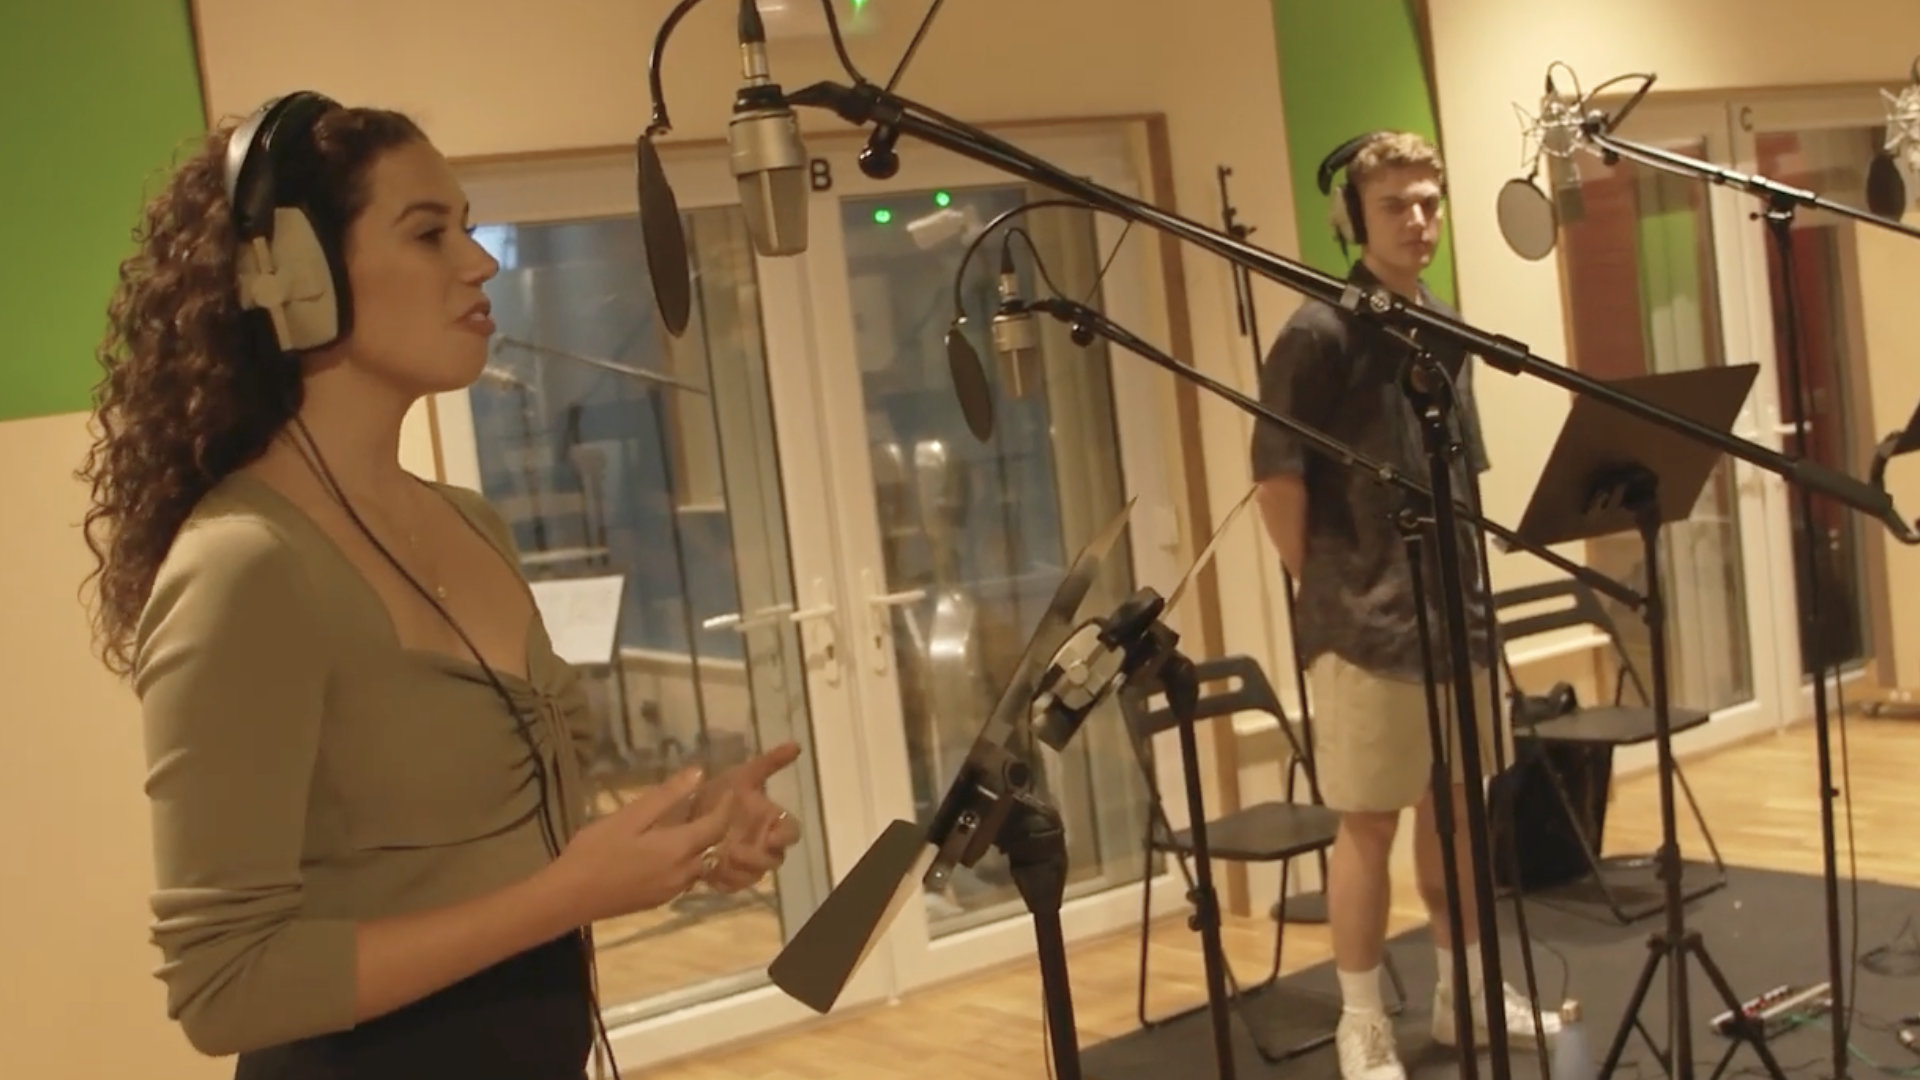 Daniel Bravo & Jessica Pardoe sing in the recording studio